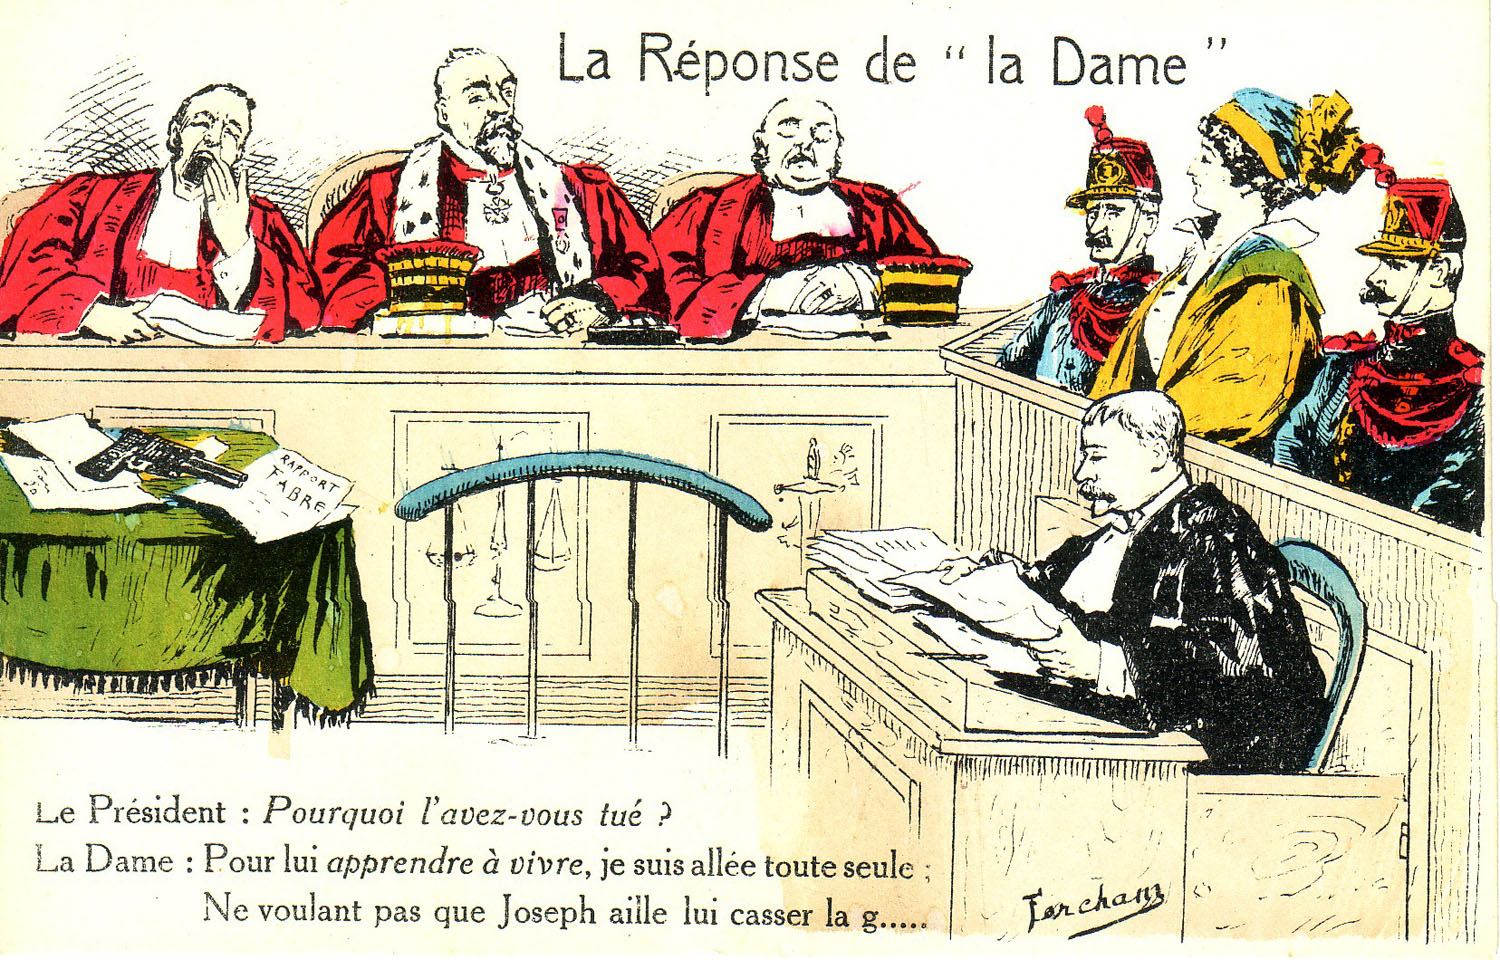 "La Reponse de la 'Dame.'" "The Response of the 'Lady.'"